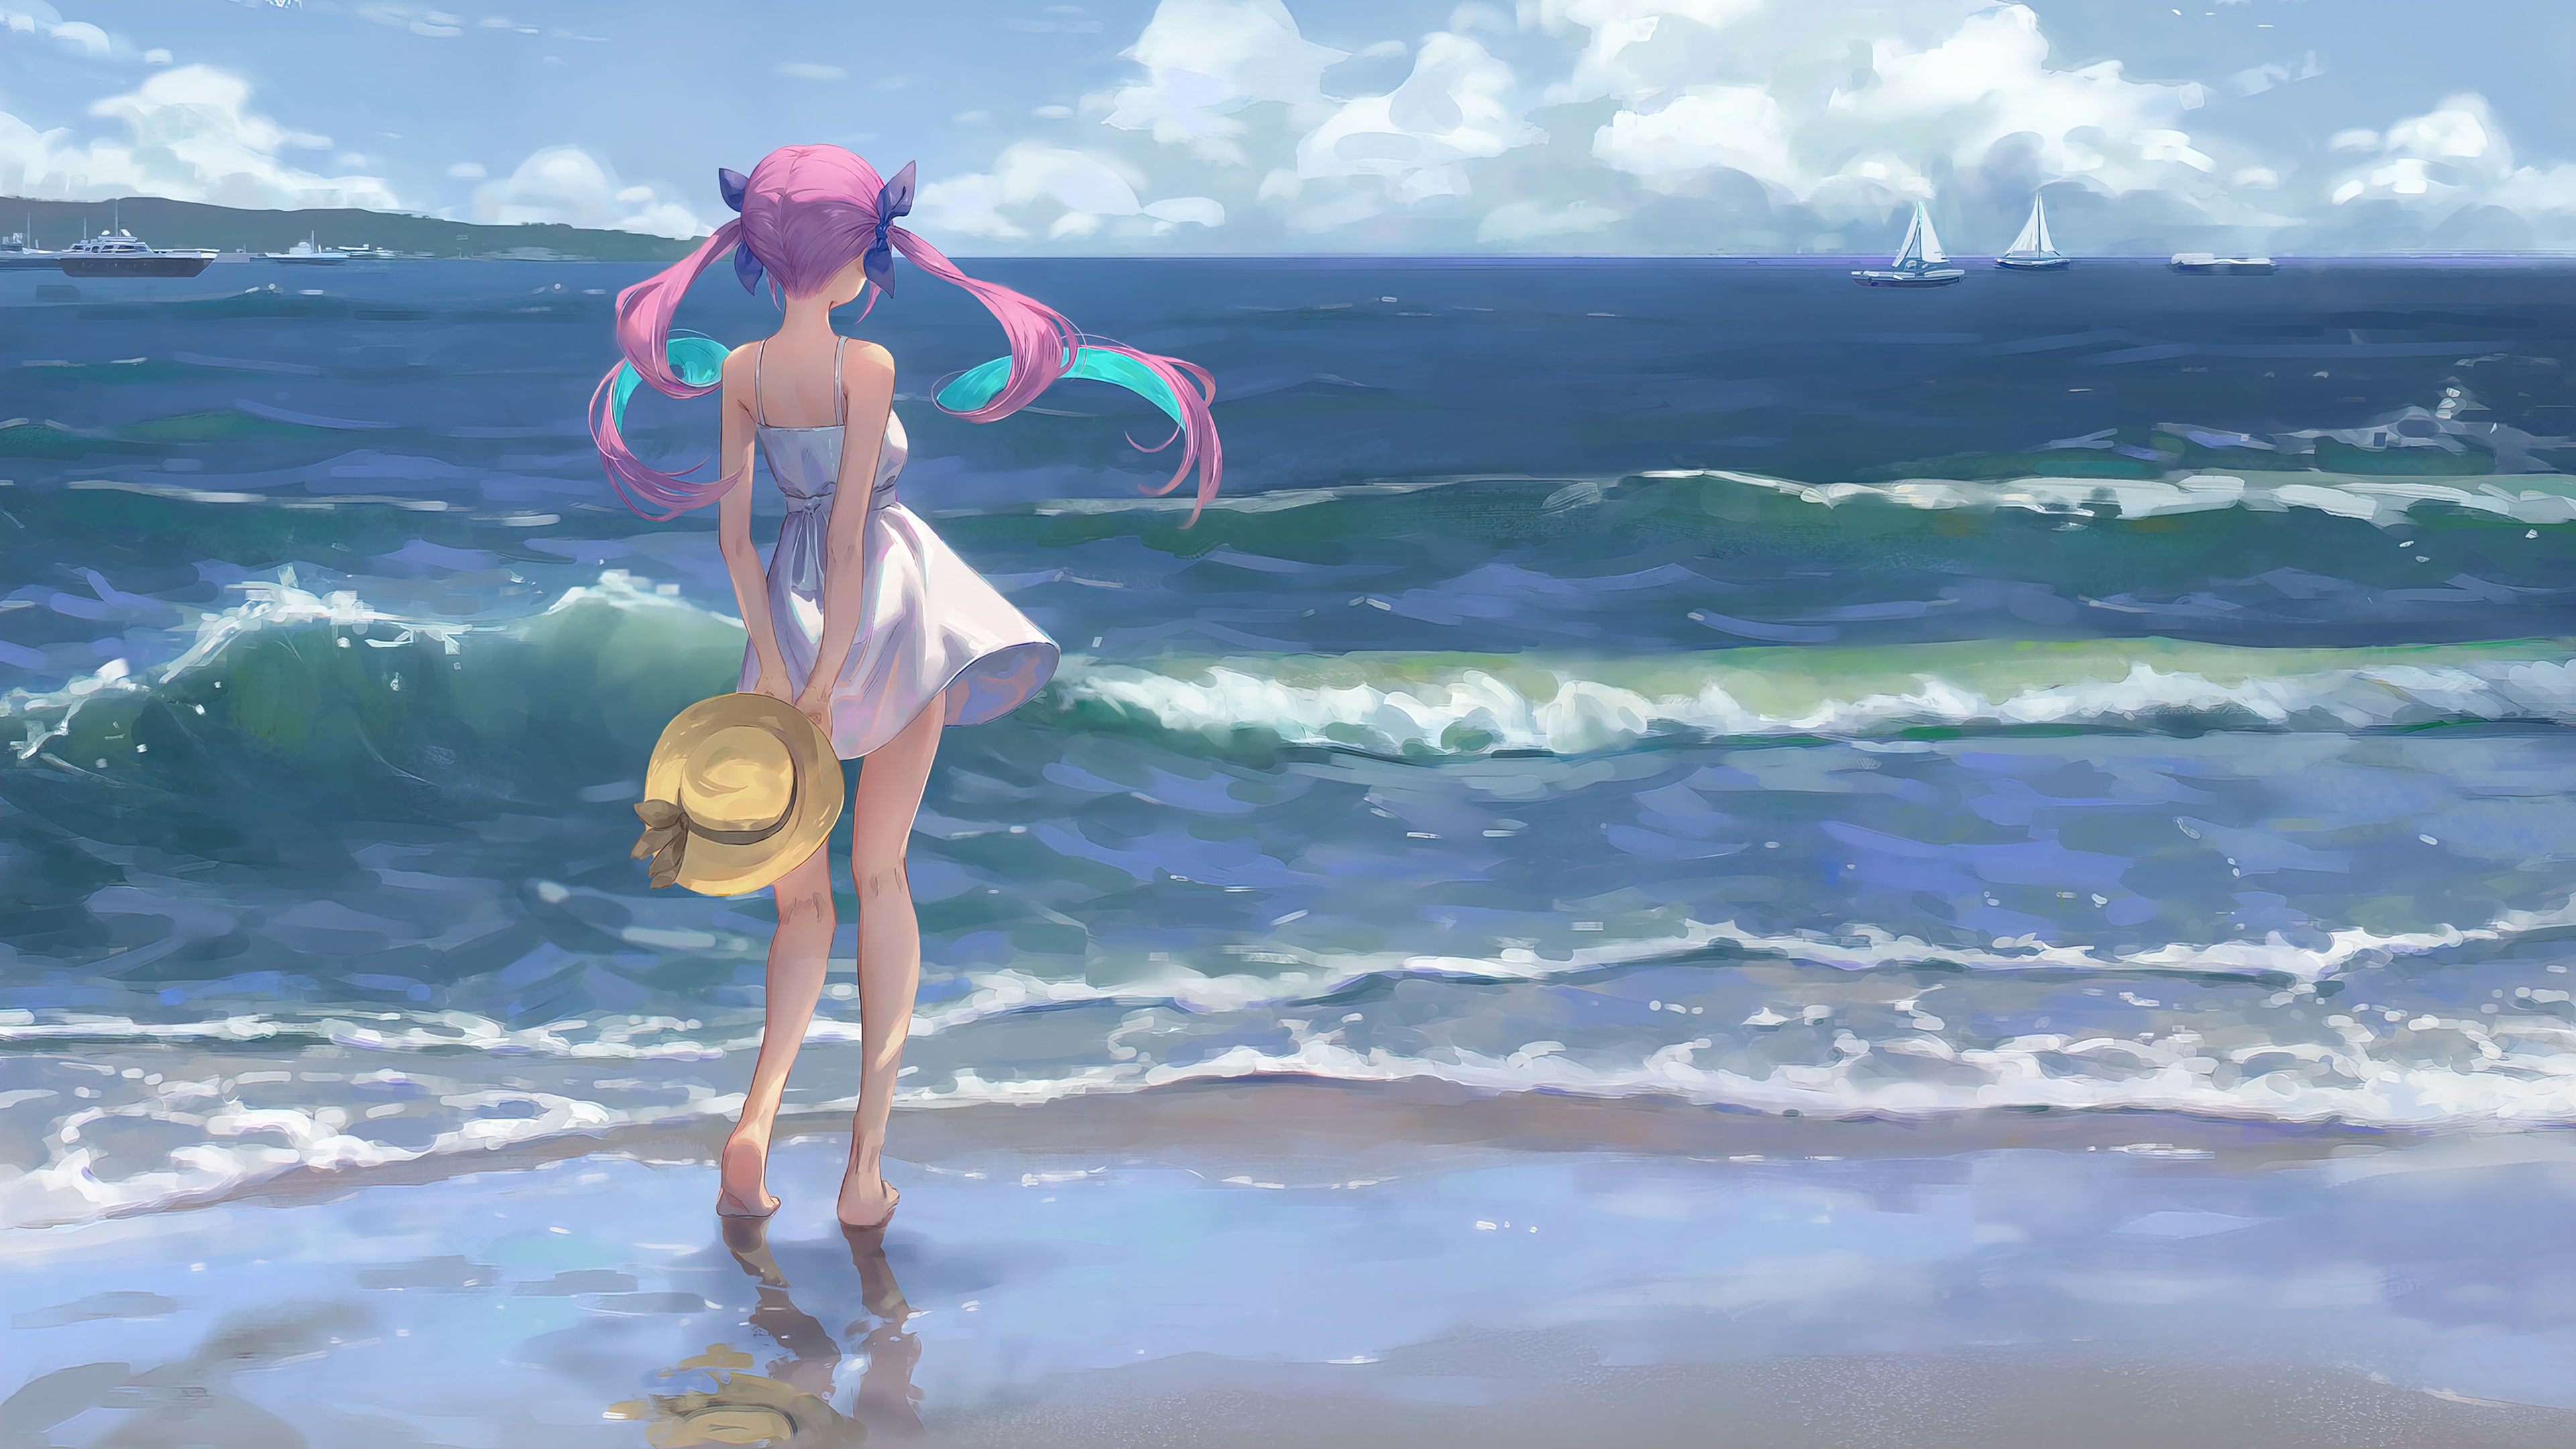 Anime Art Boy And Girl Friendship To Love Beach by mdkamran1 on DeviantArt